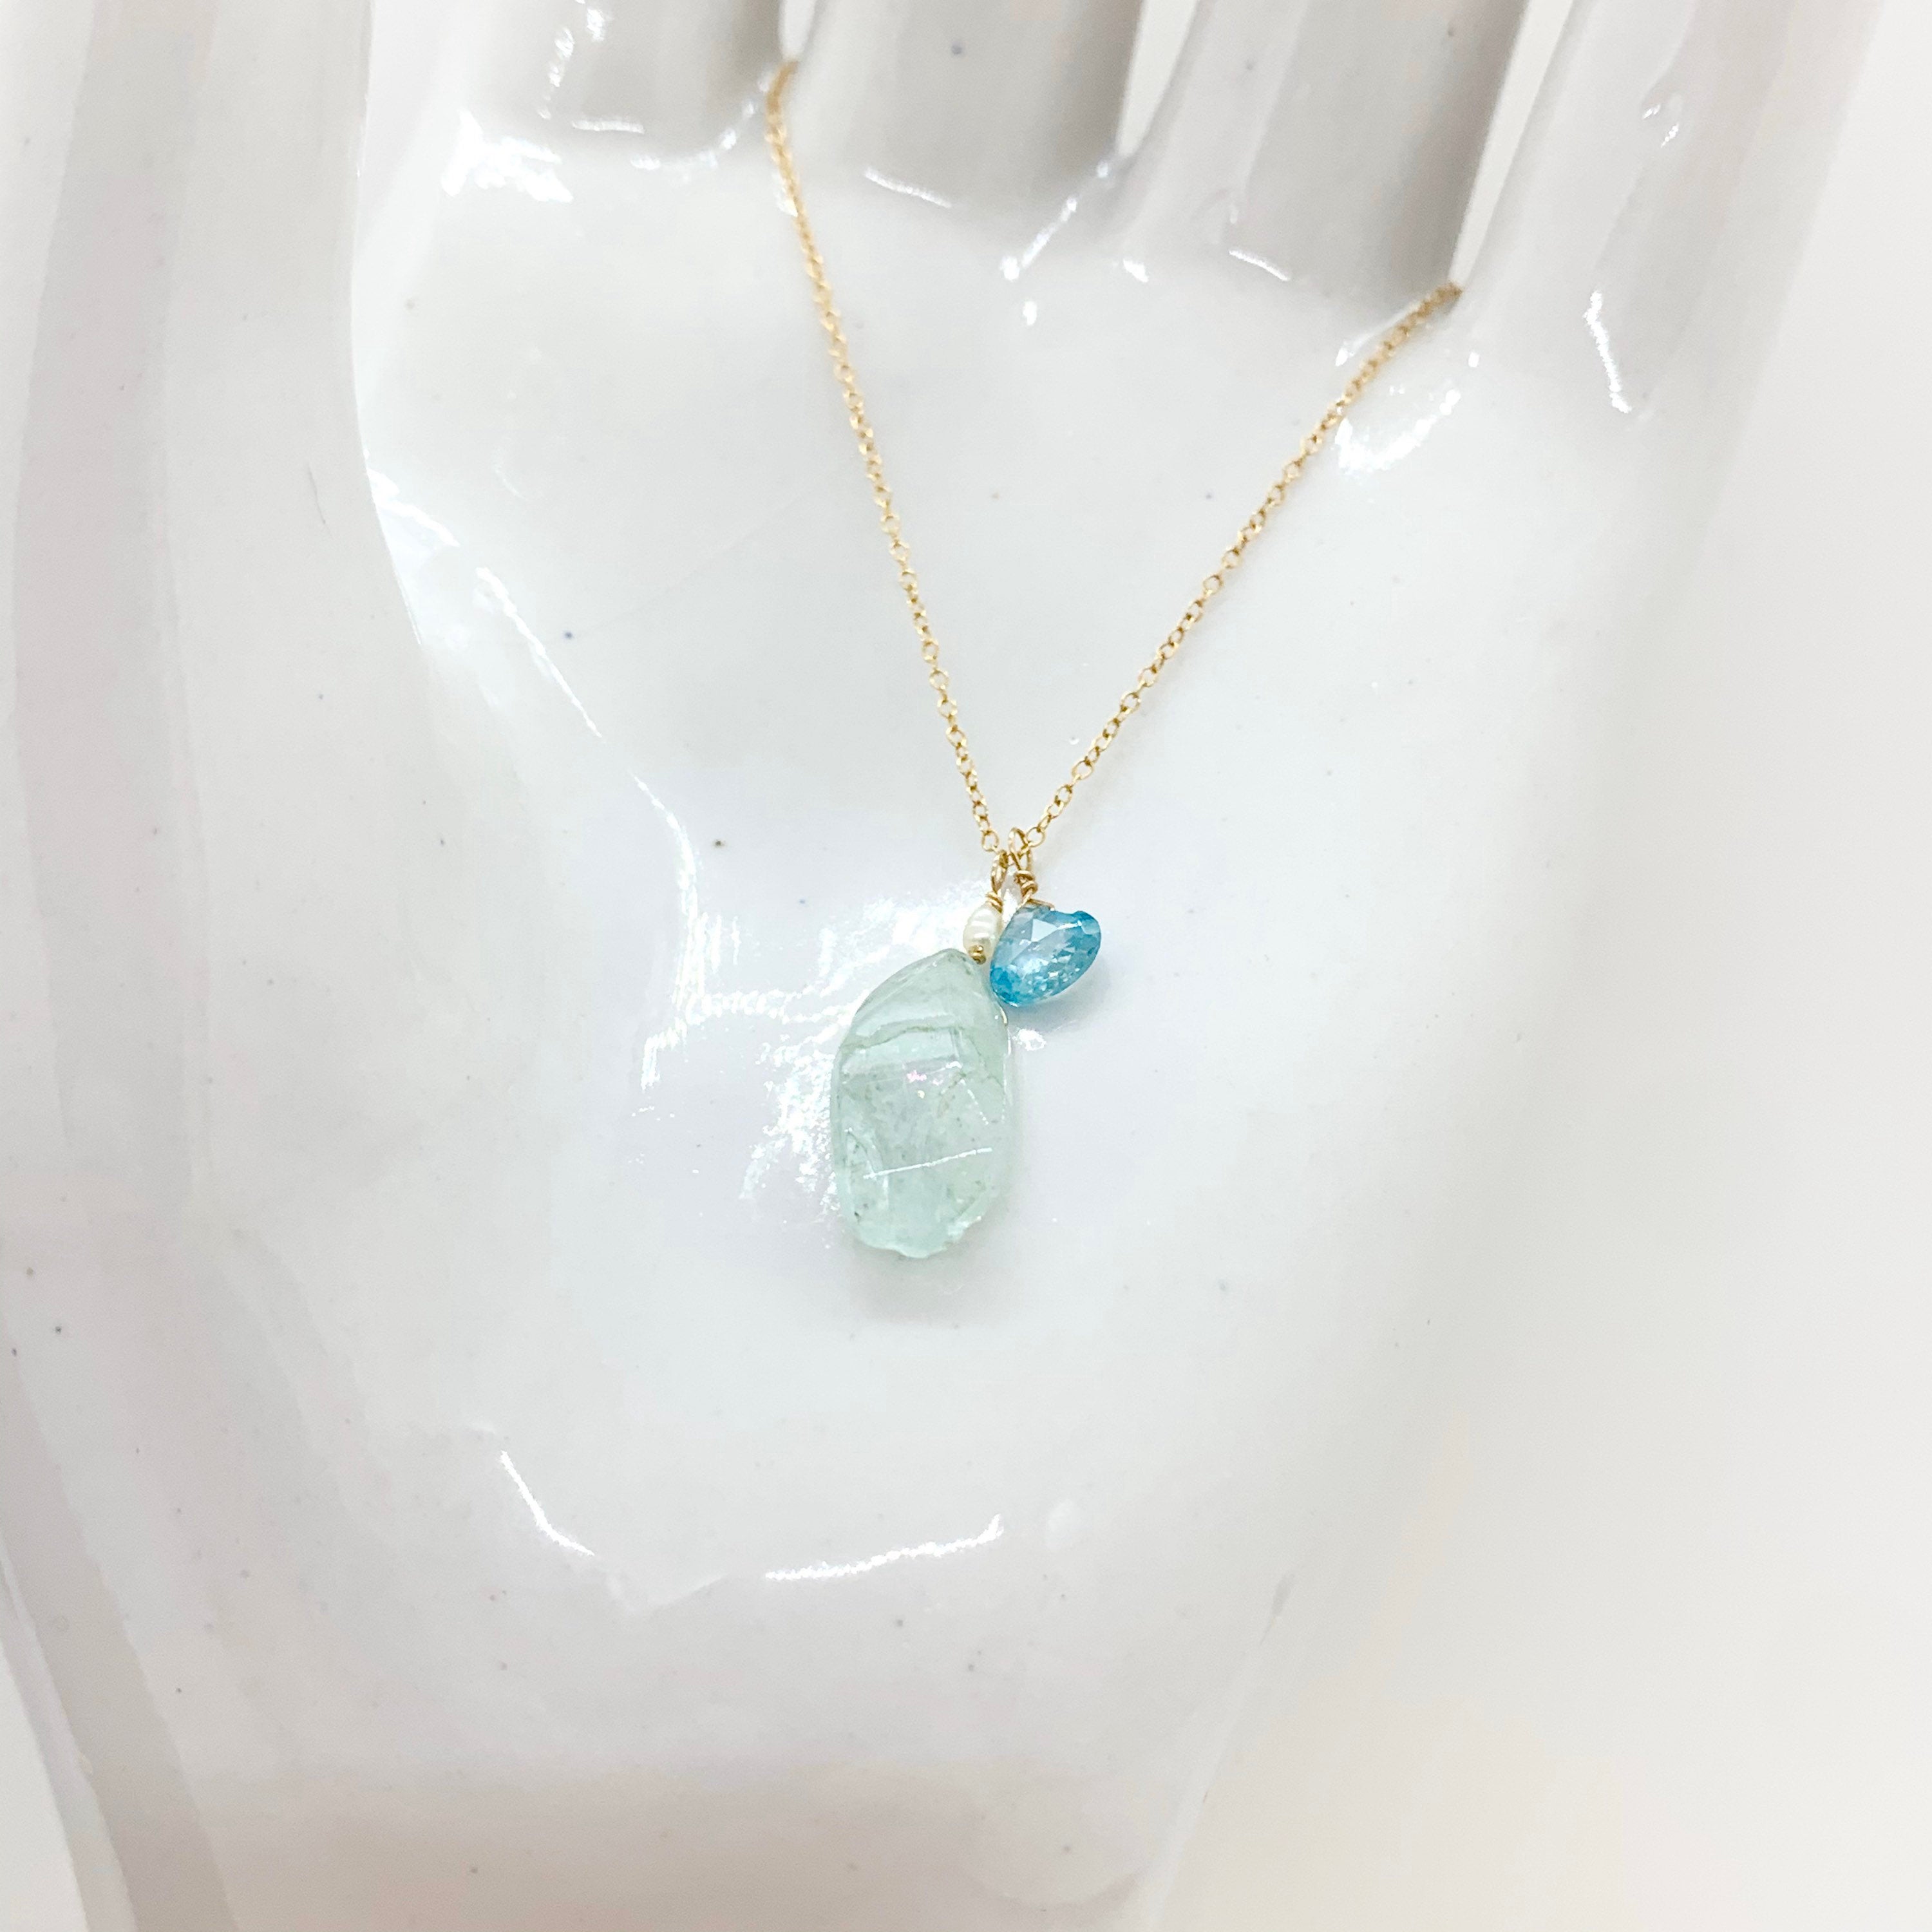 14k Gold Chain Necklace w/ Aquamarine, Opal & Keshi Pearl